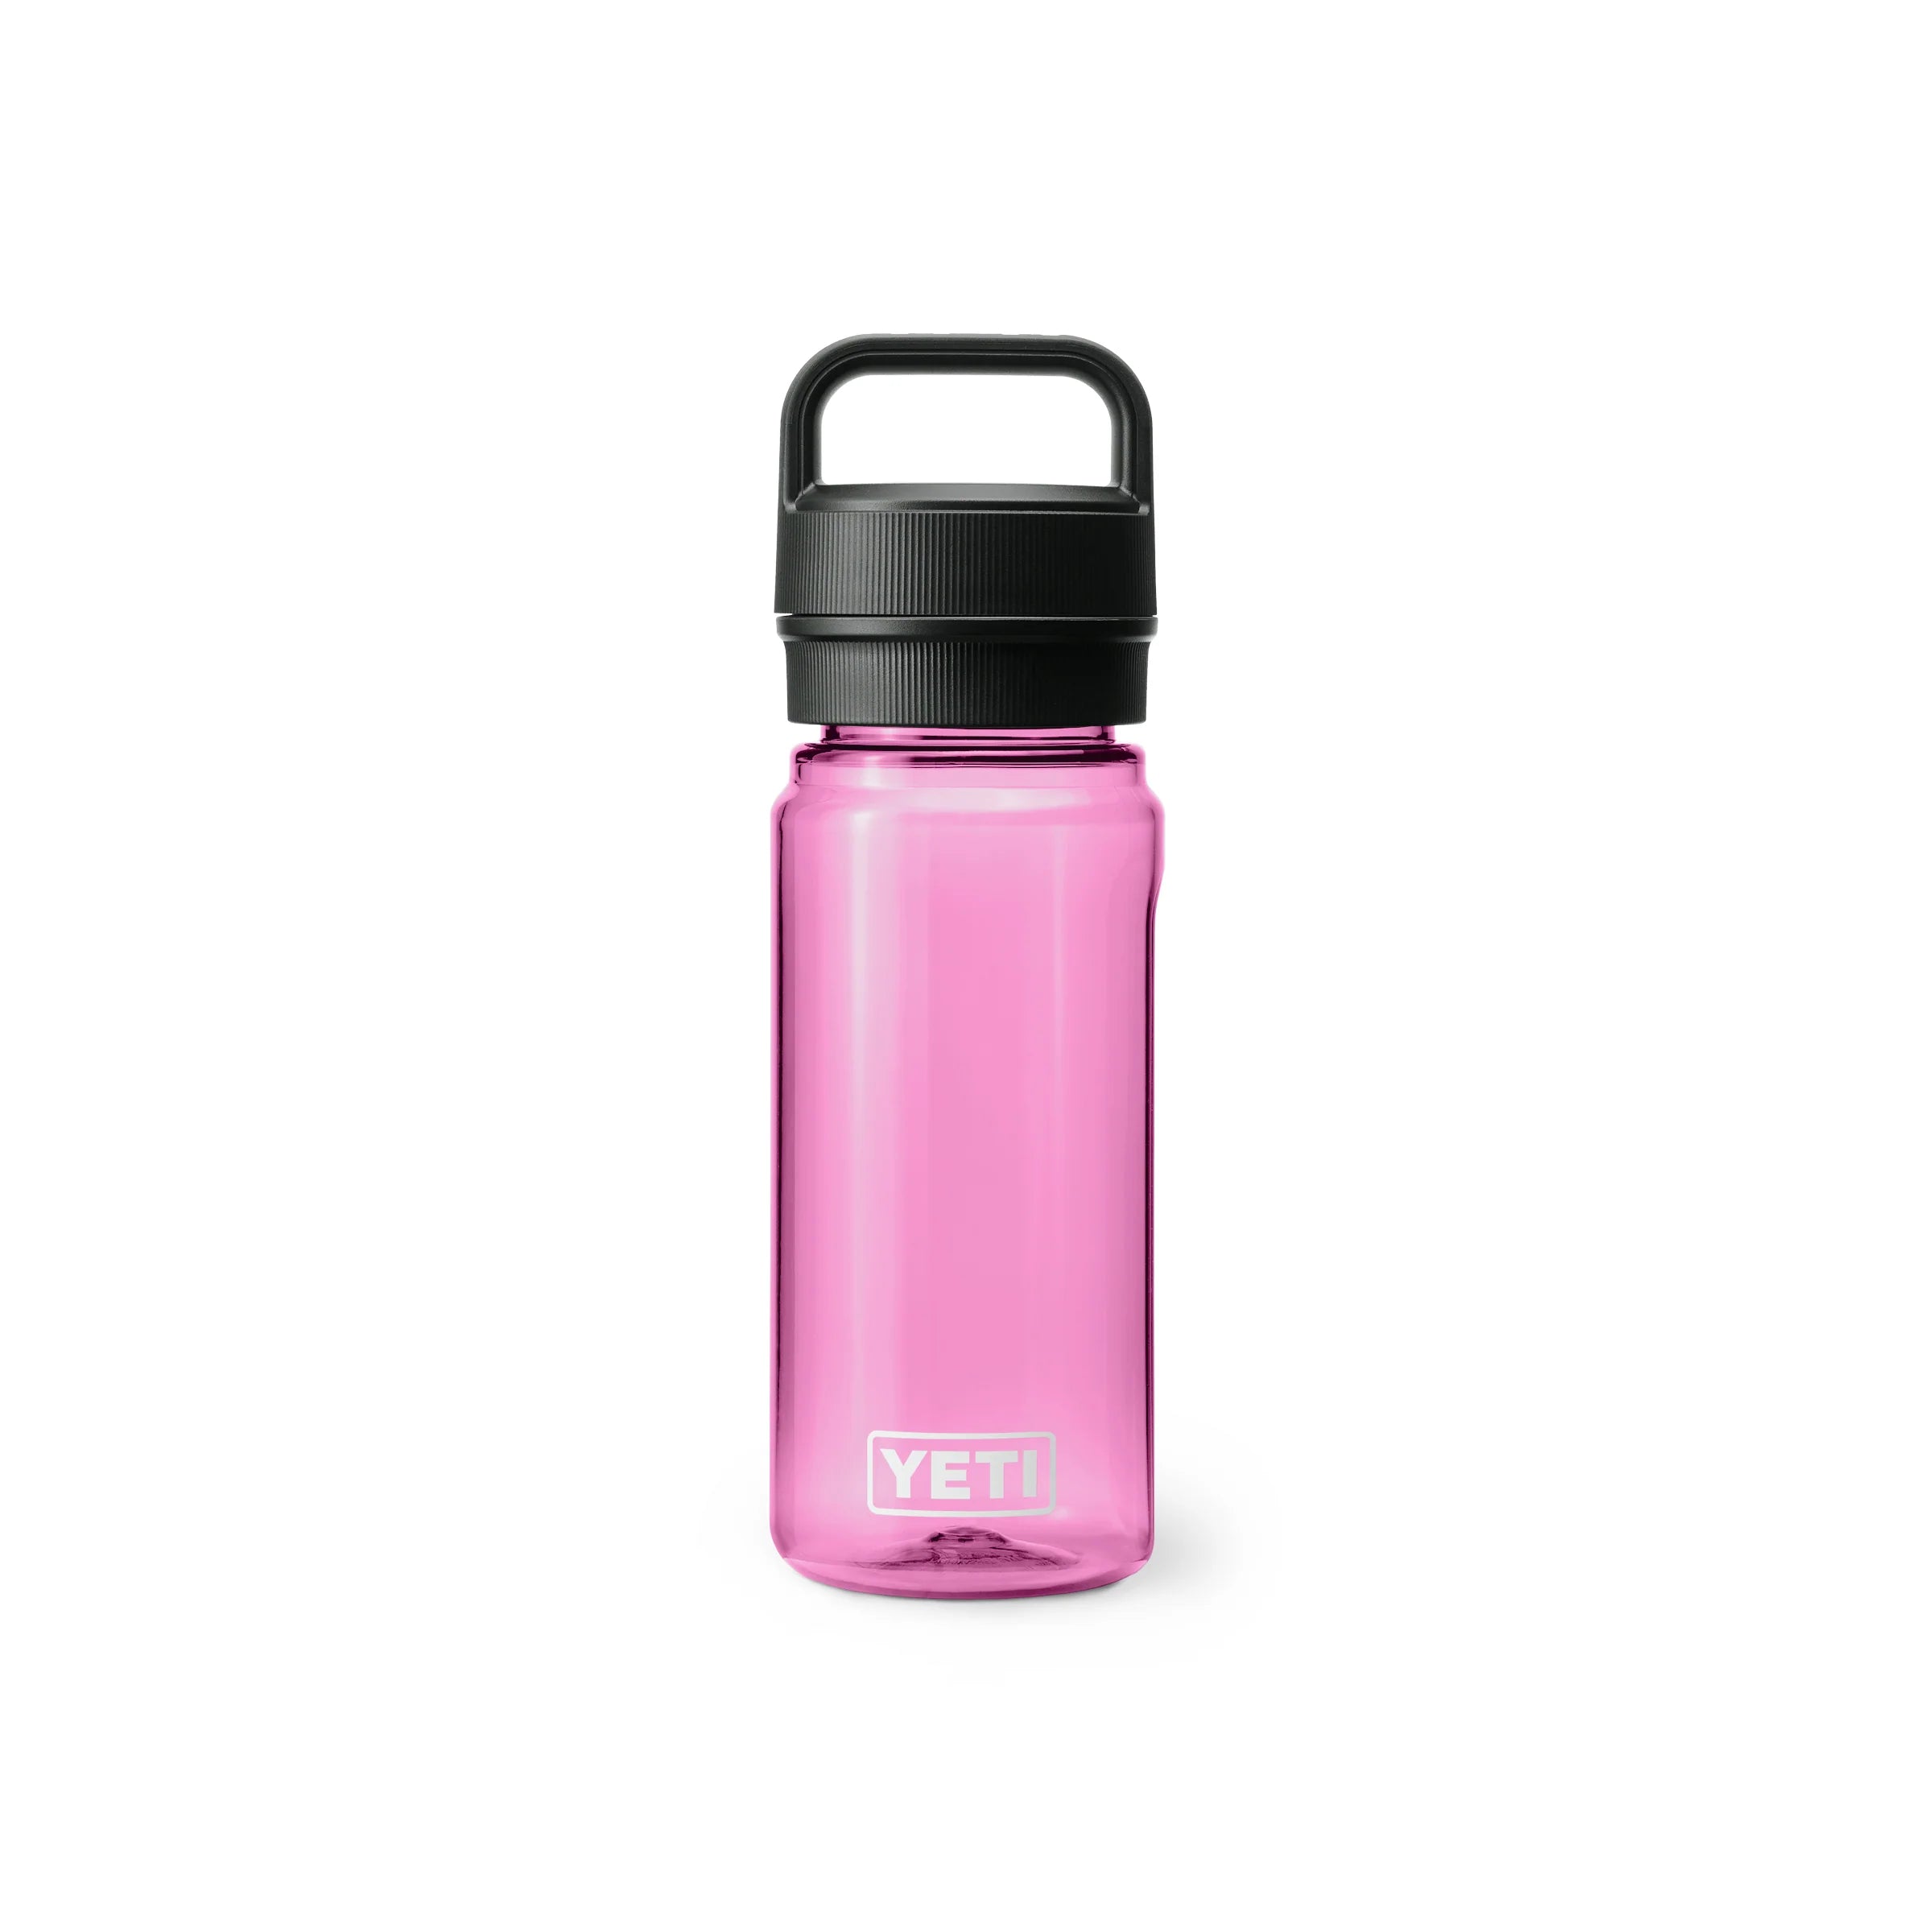 Yonder .6L Water bottle Power Pink